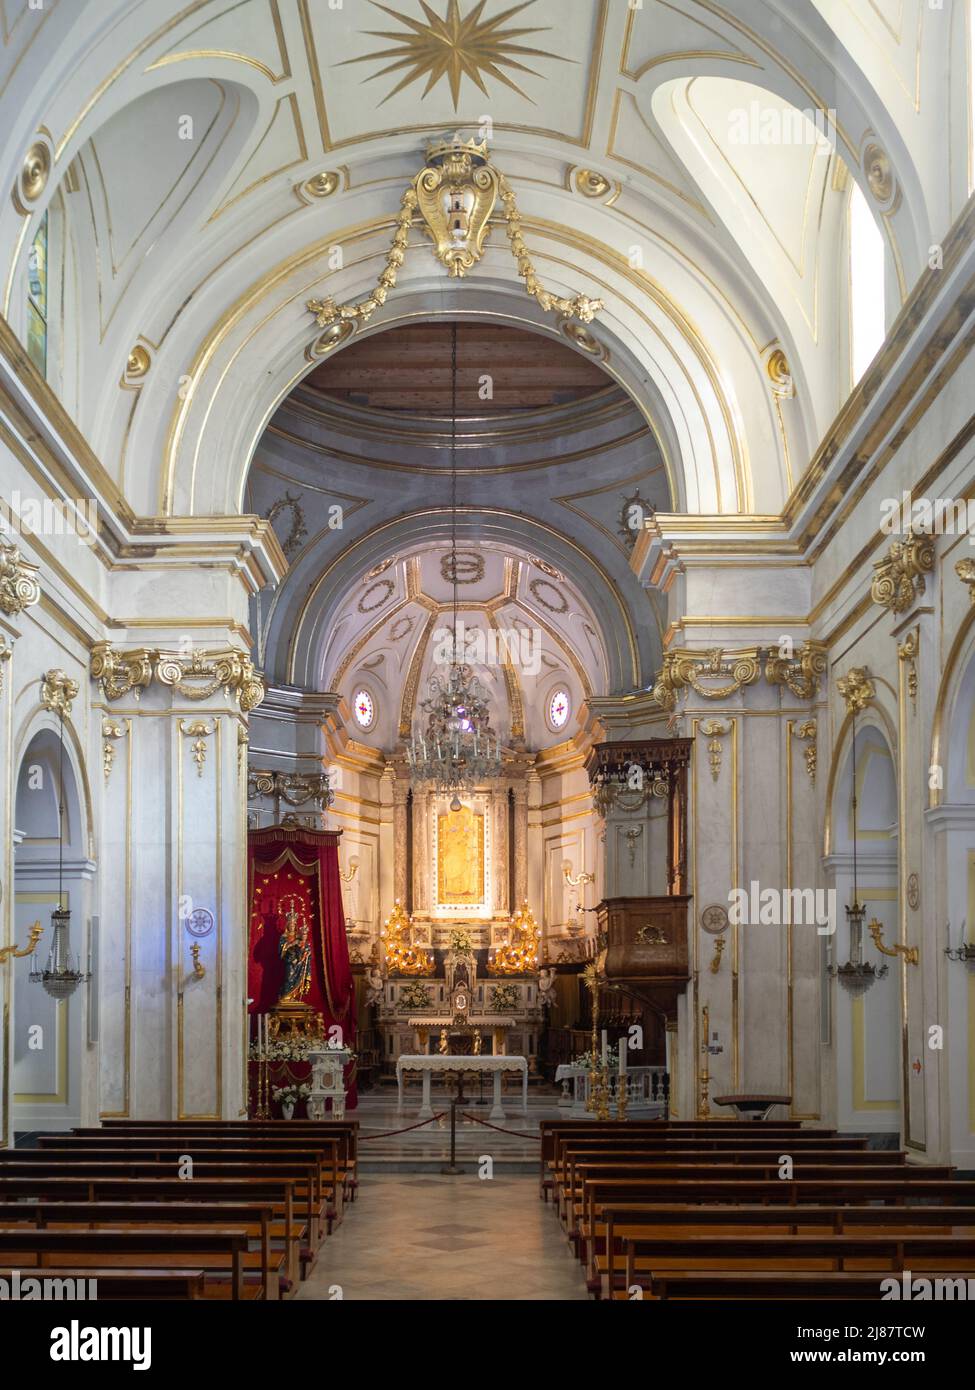 Positano Santa Maria Assunta Church interior Stock Photo